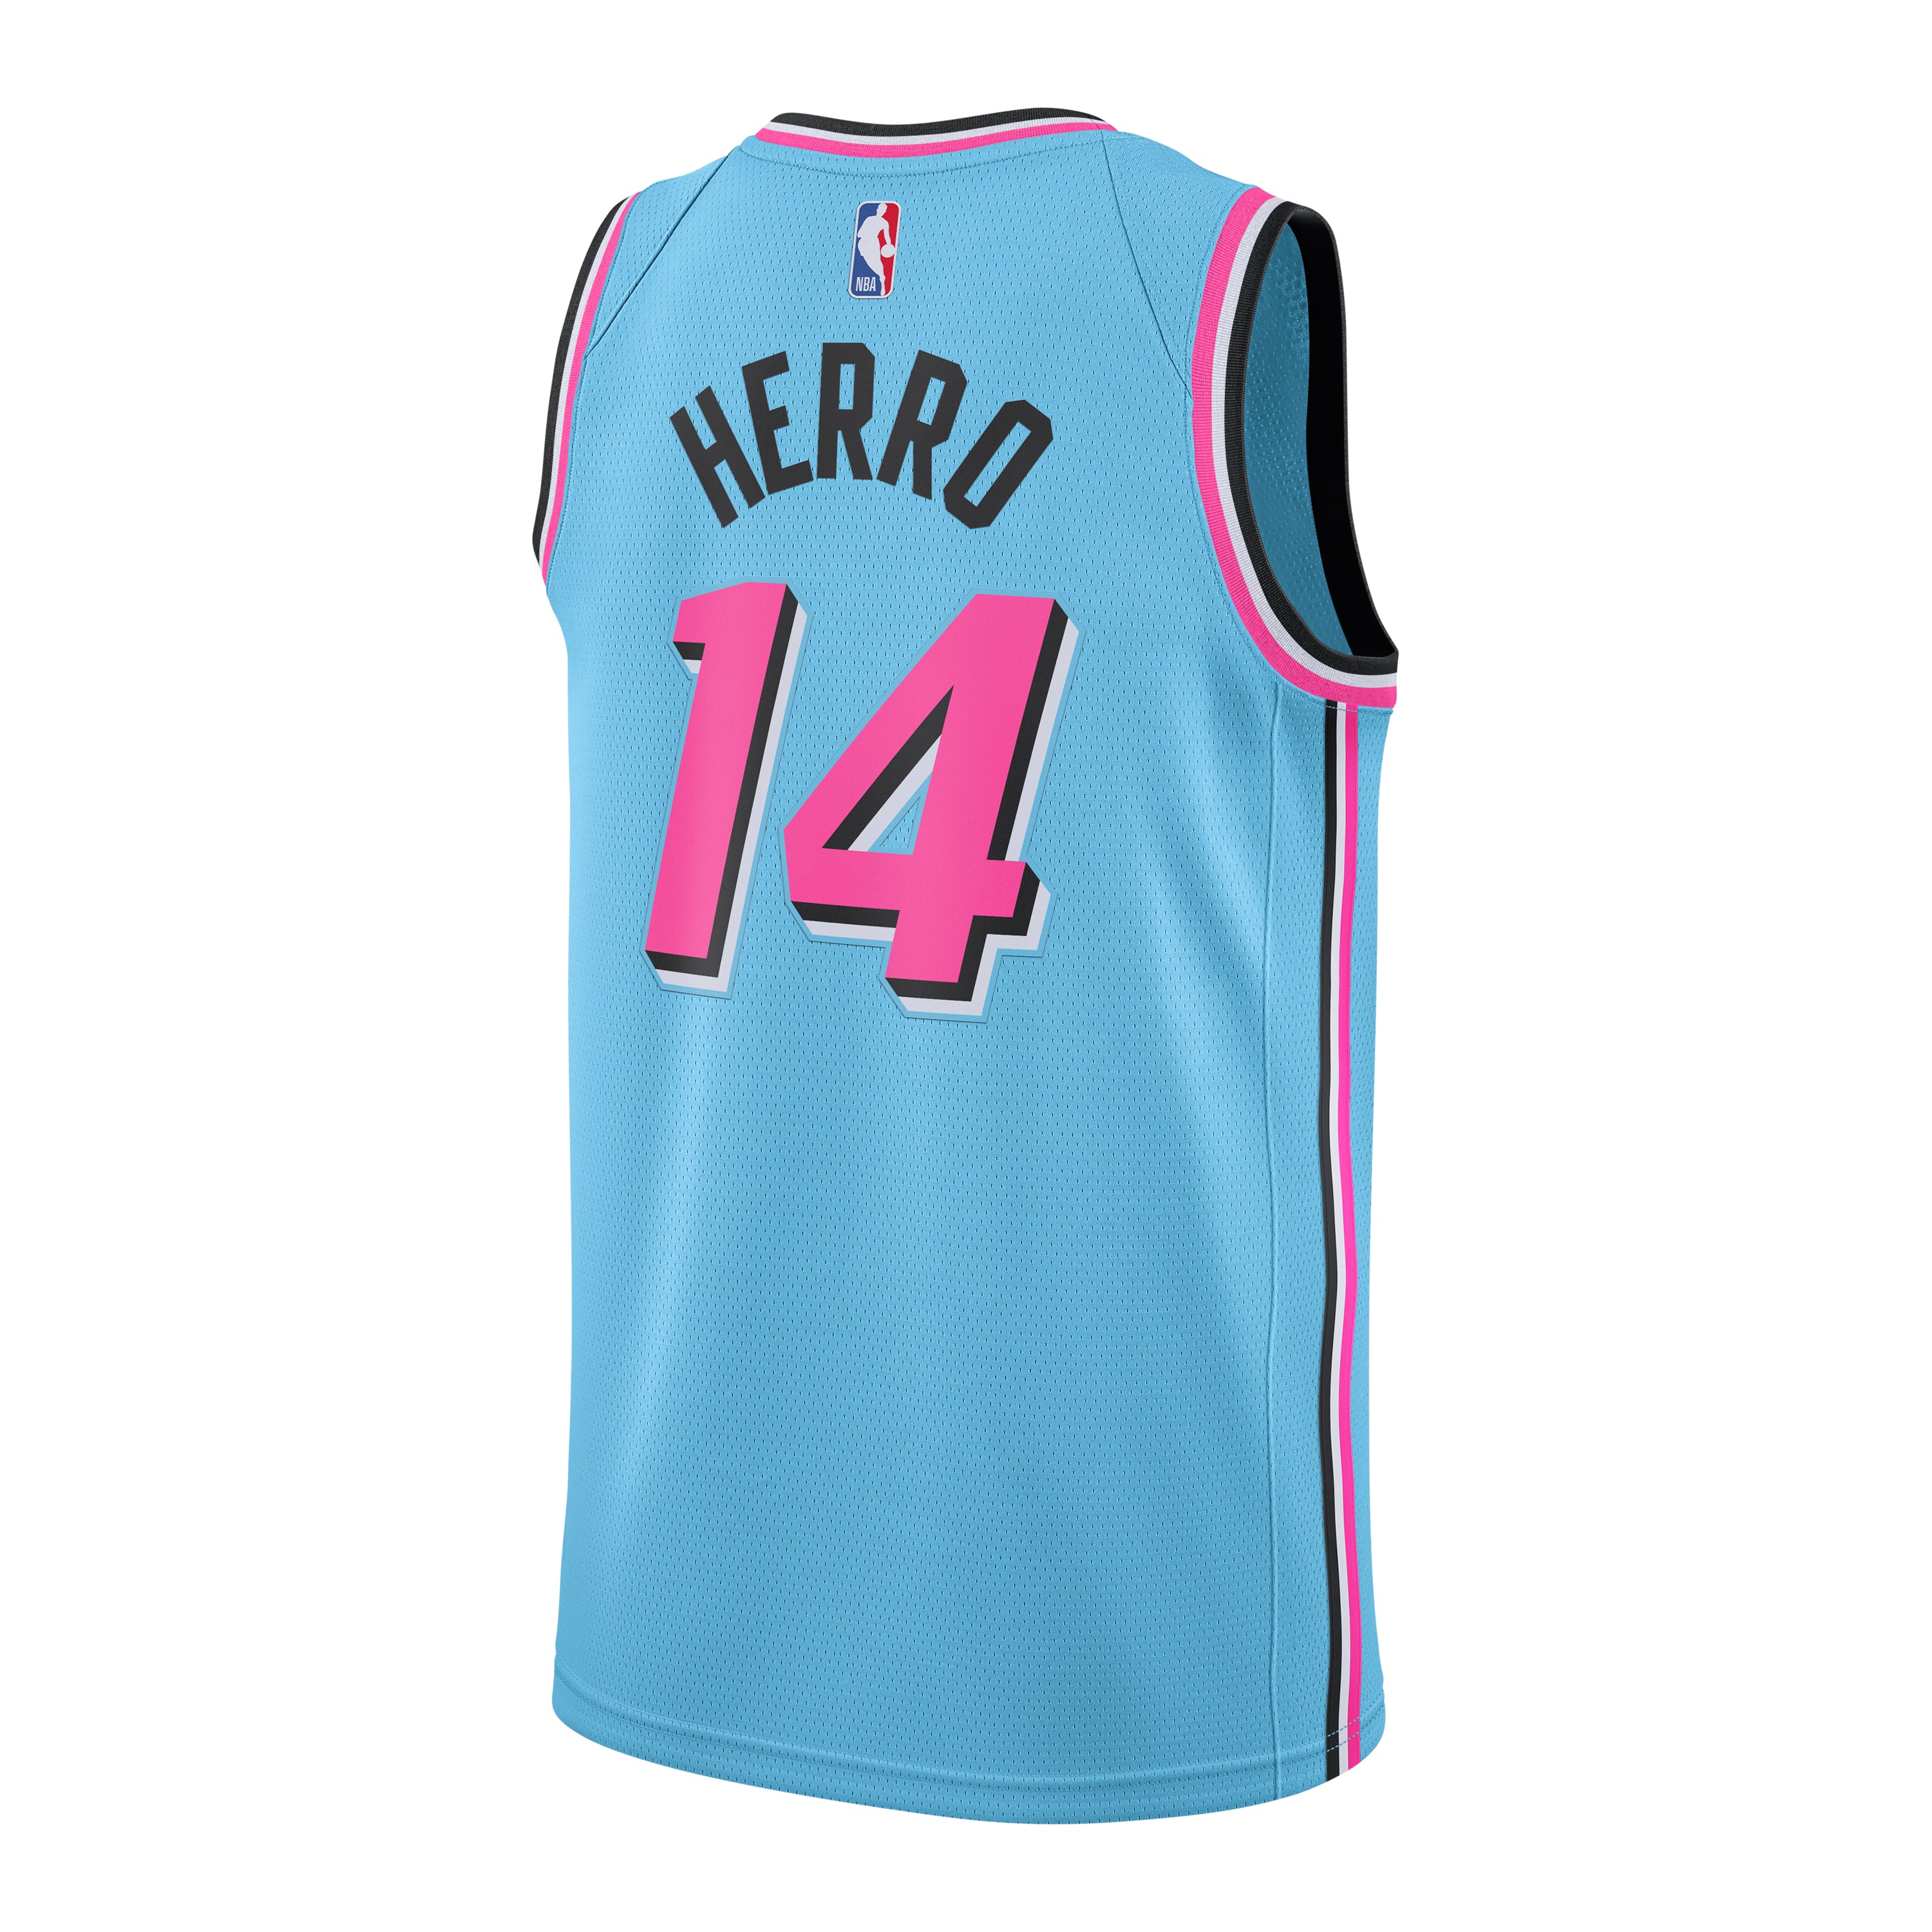 Tyler Herro 2019-20 Miami Heat Nike Vice City Ed. Rookie Authentic